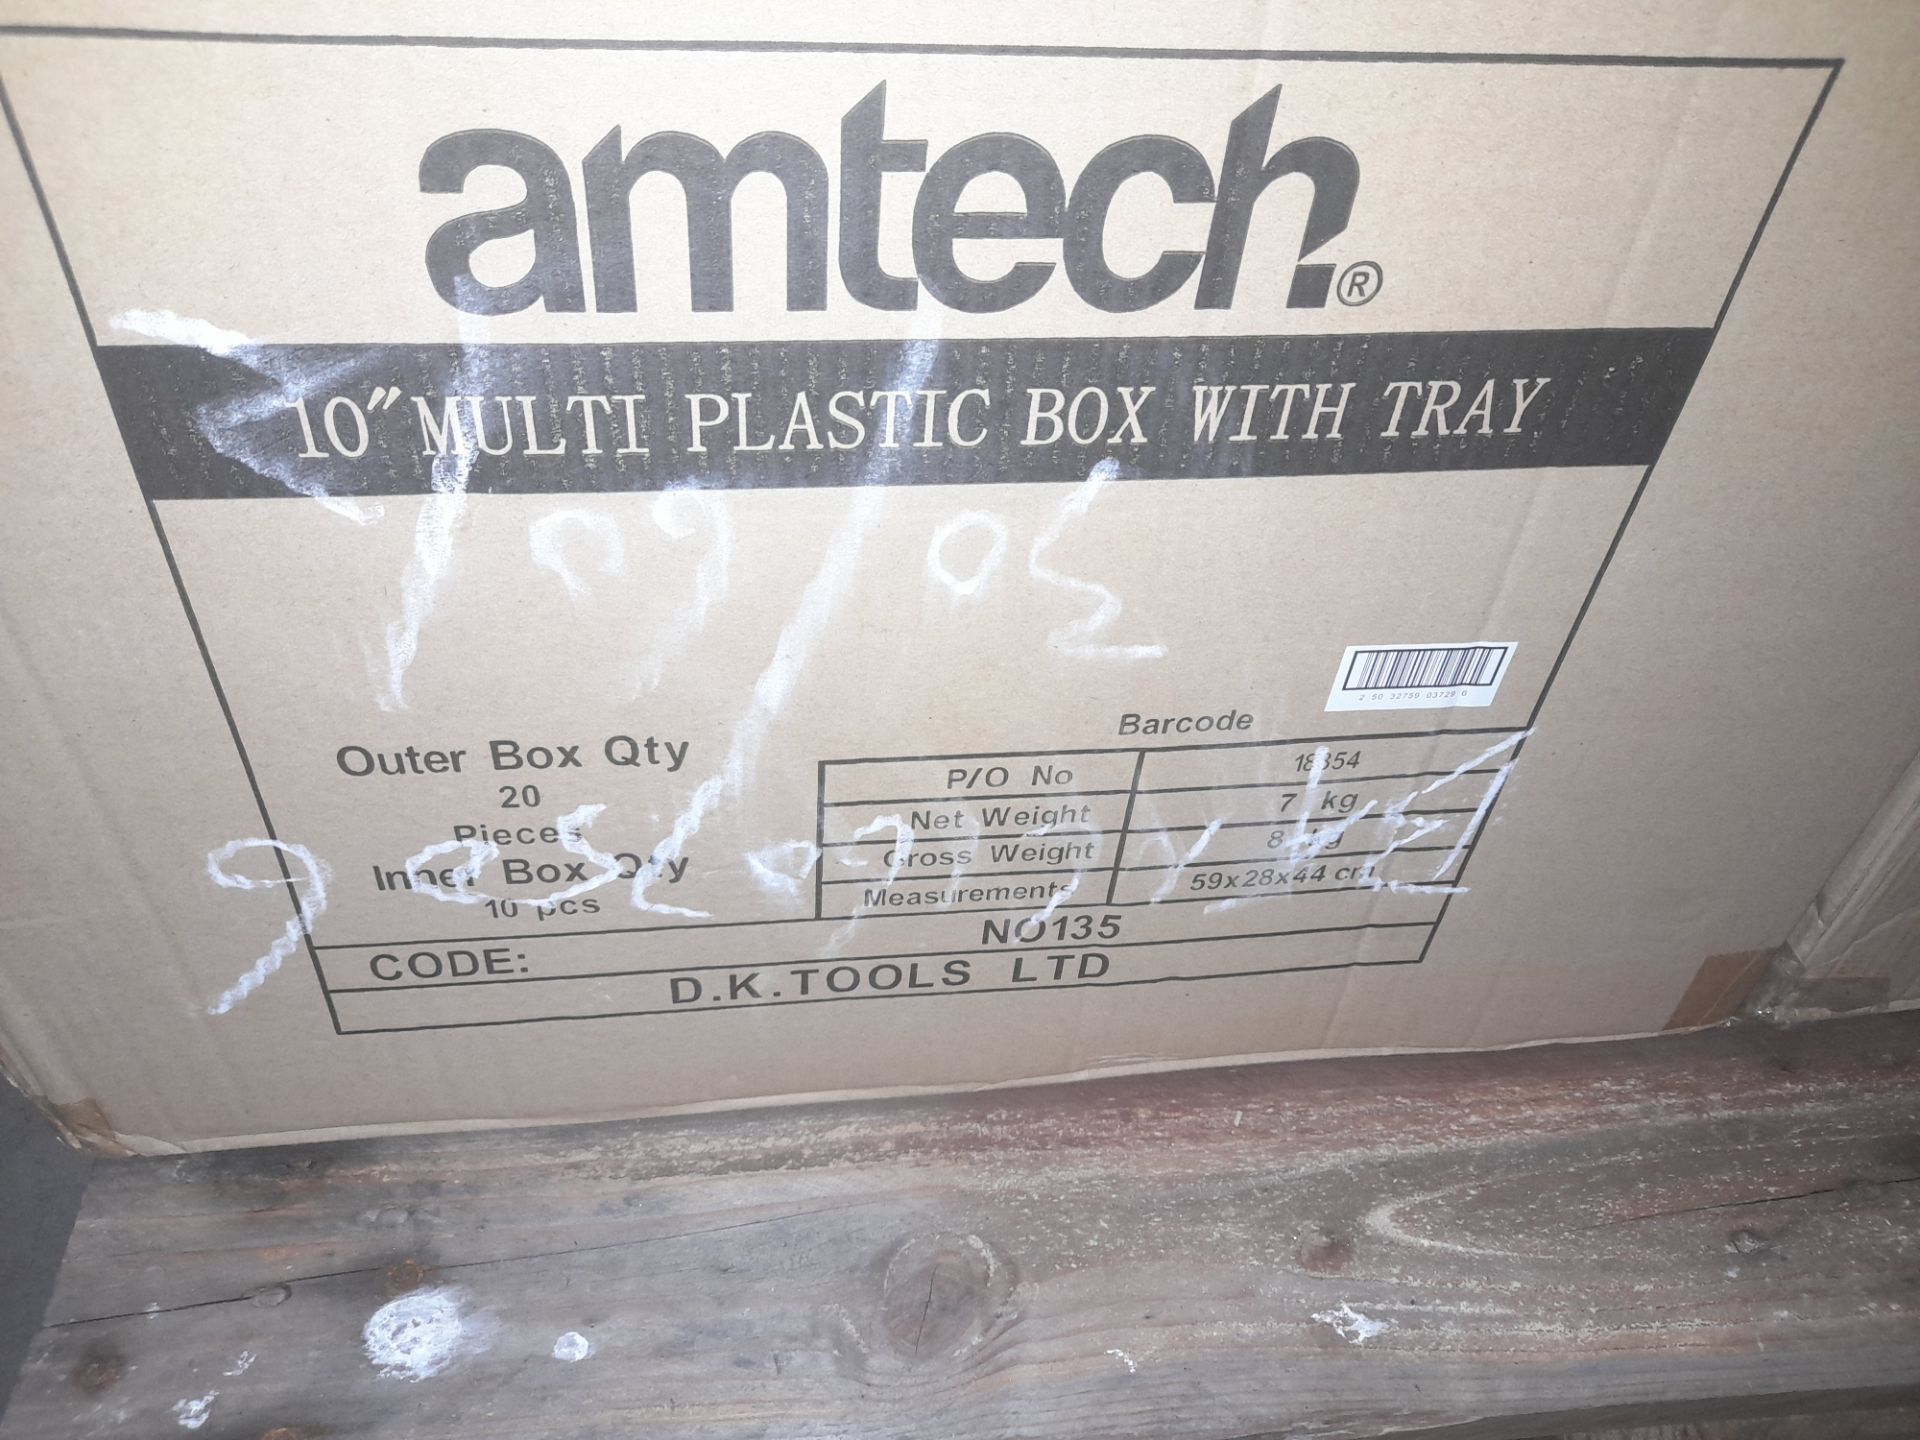 1 x Box of Amtech 10” Multi Plastic Mini Toolboxes (2 x cartons per box, 10 x tool boxes per carton, - Image 2 of 3